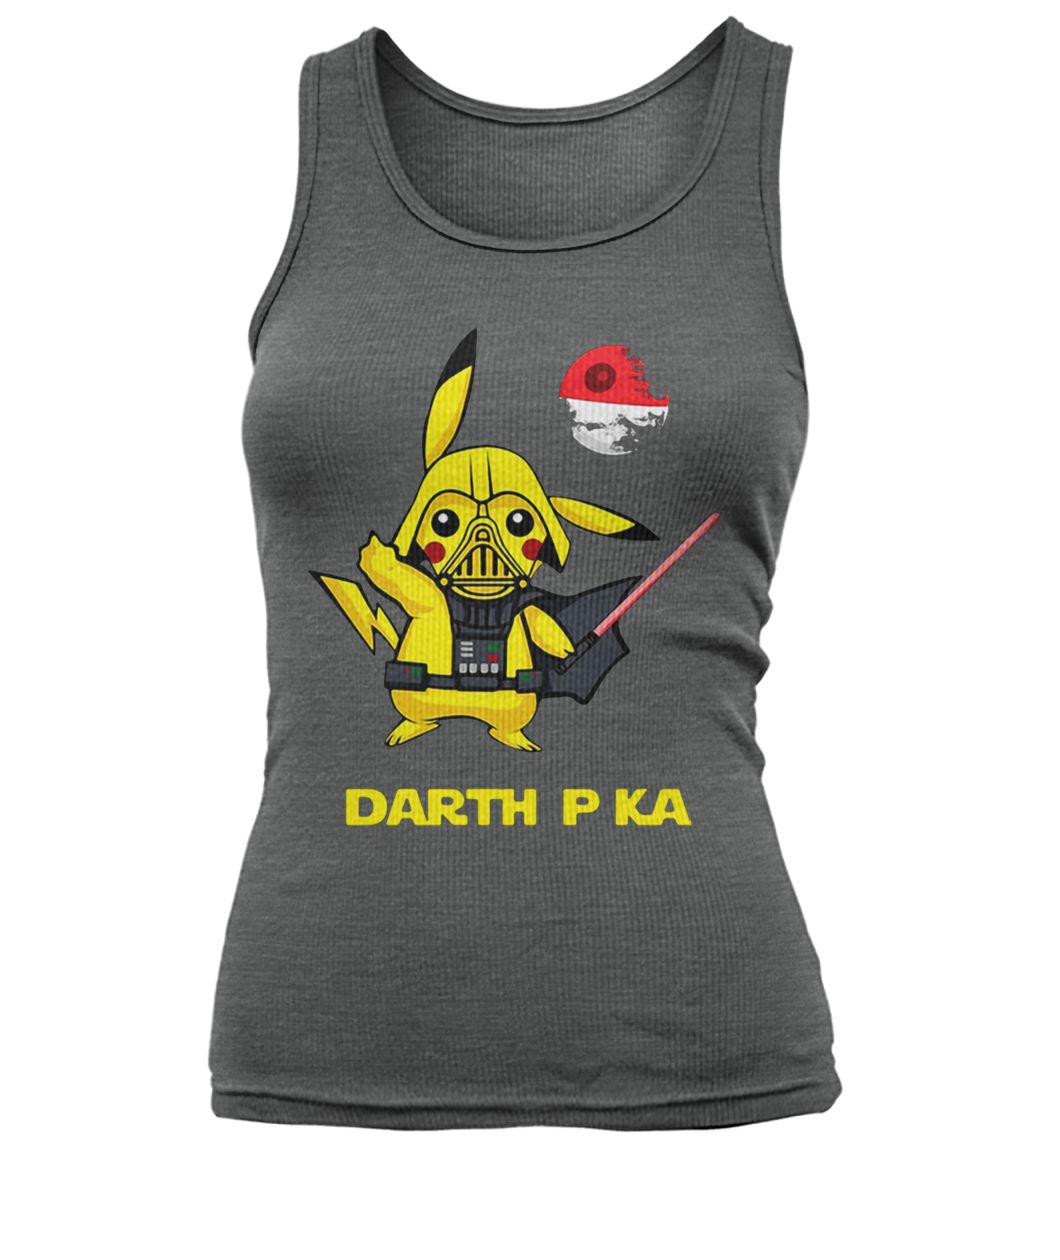 Pikachu cosplay darth vader star wars women's tank top